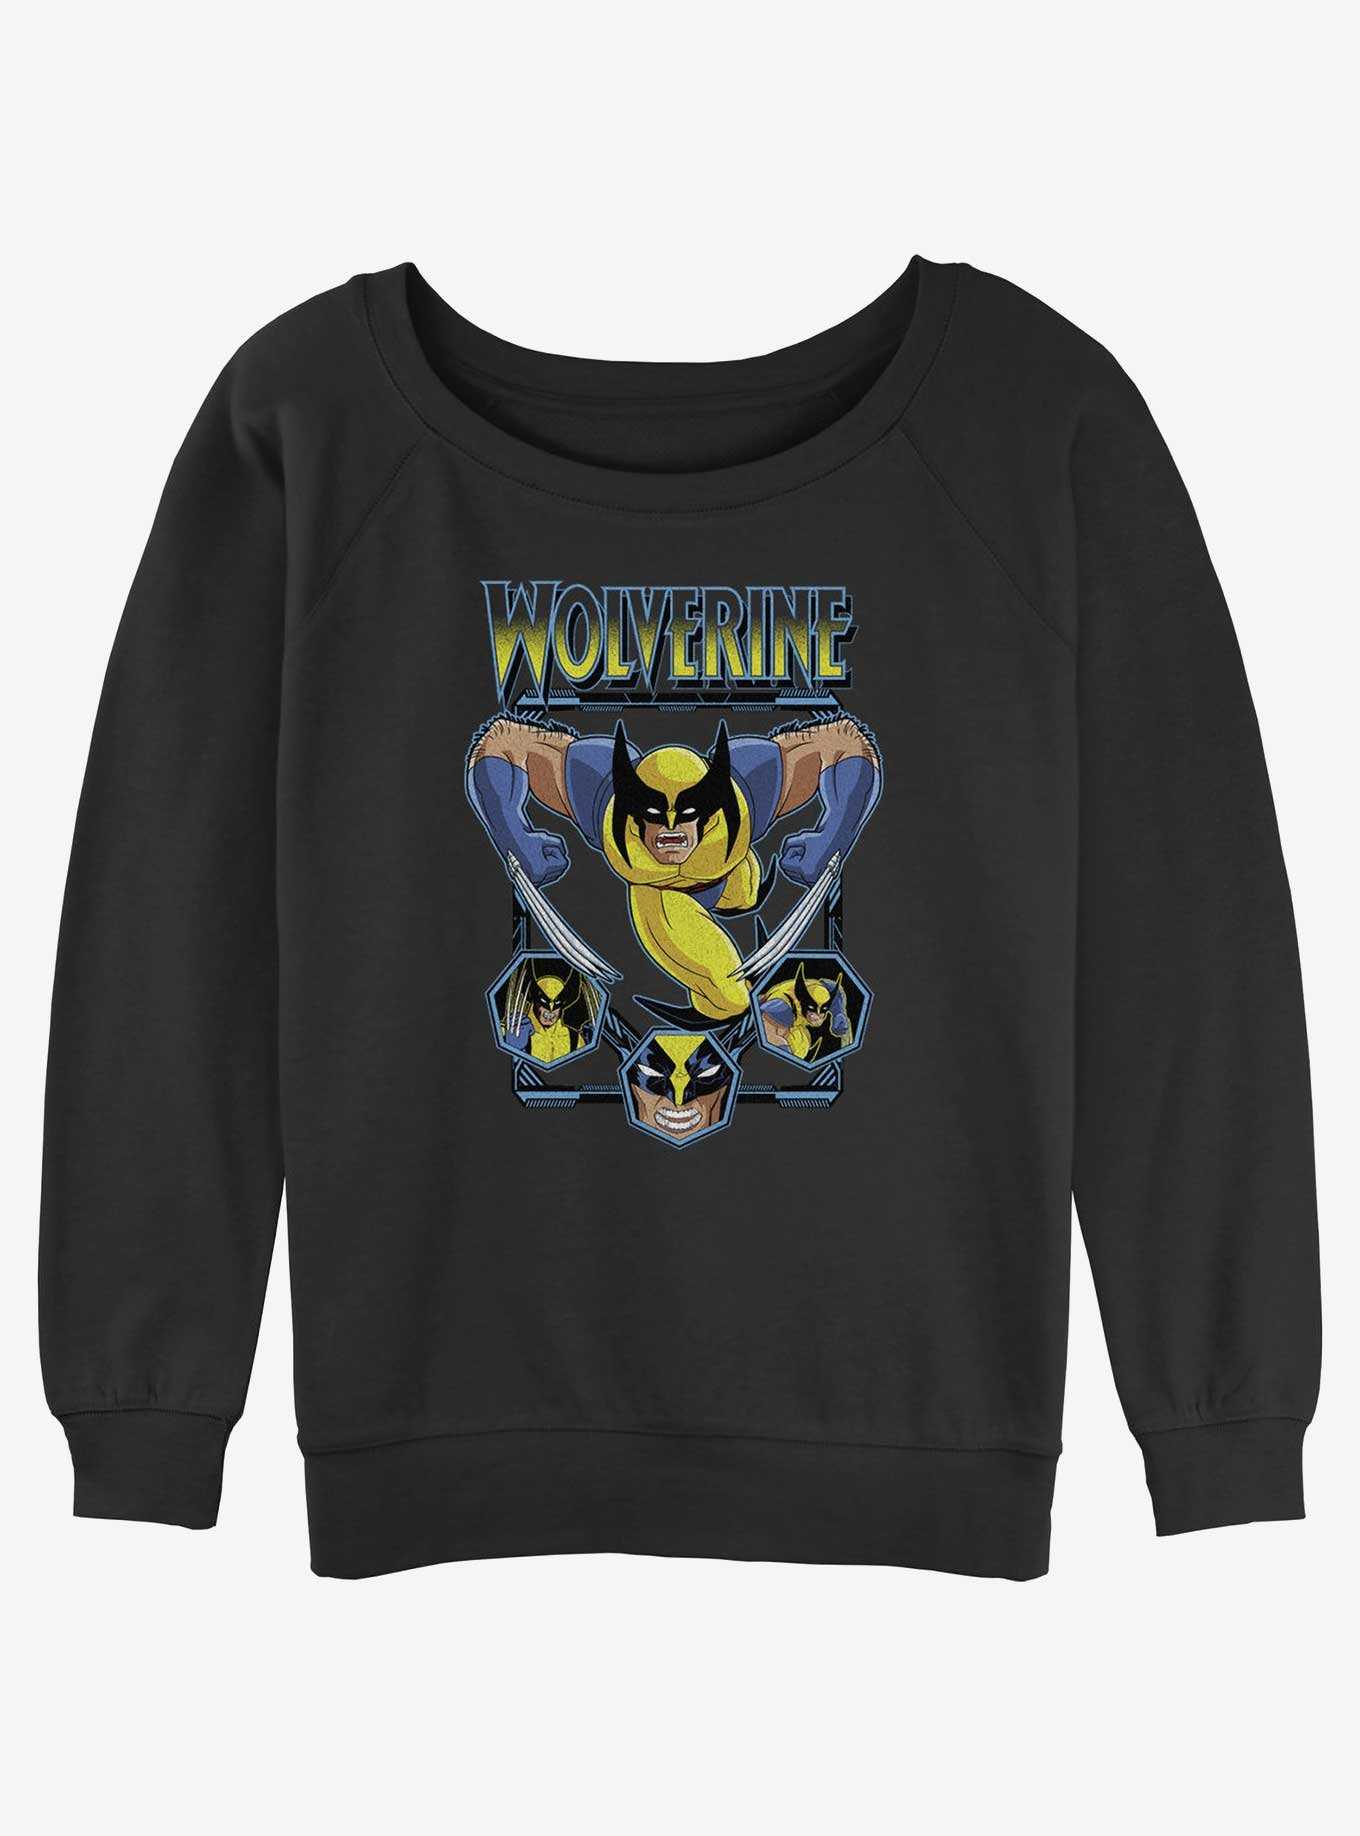 Wolverine Animated Attack Girls Slouchy Sweatshirt, , hi-res